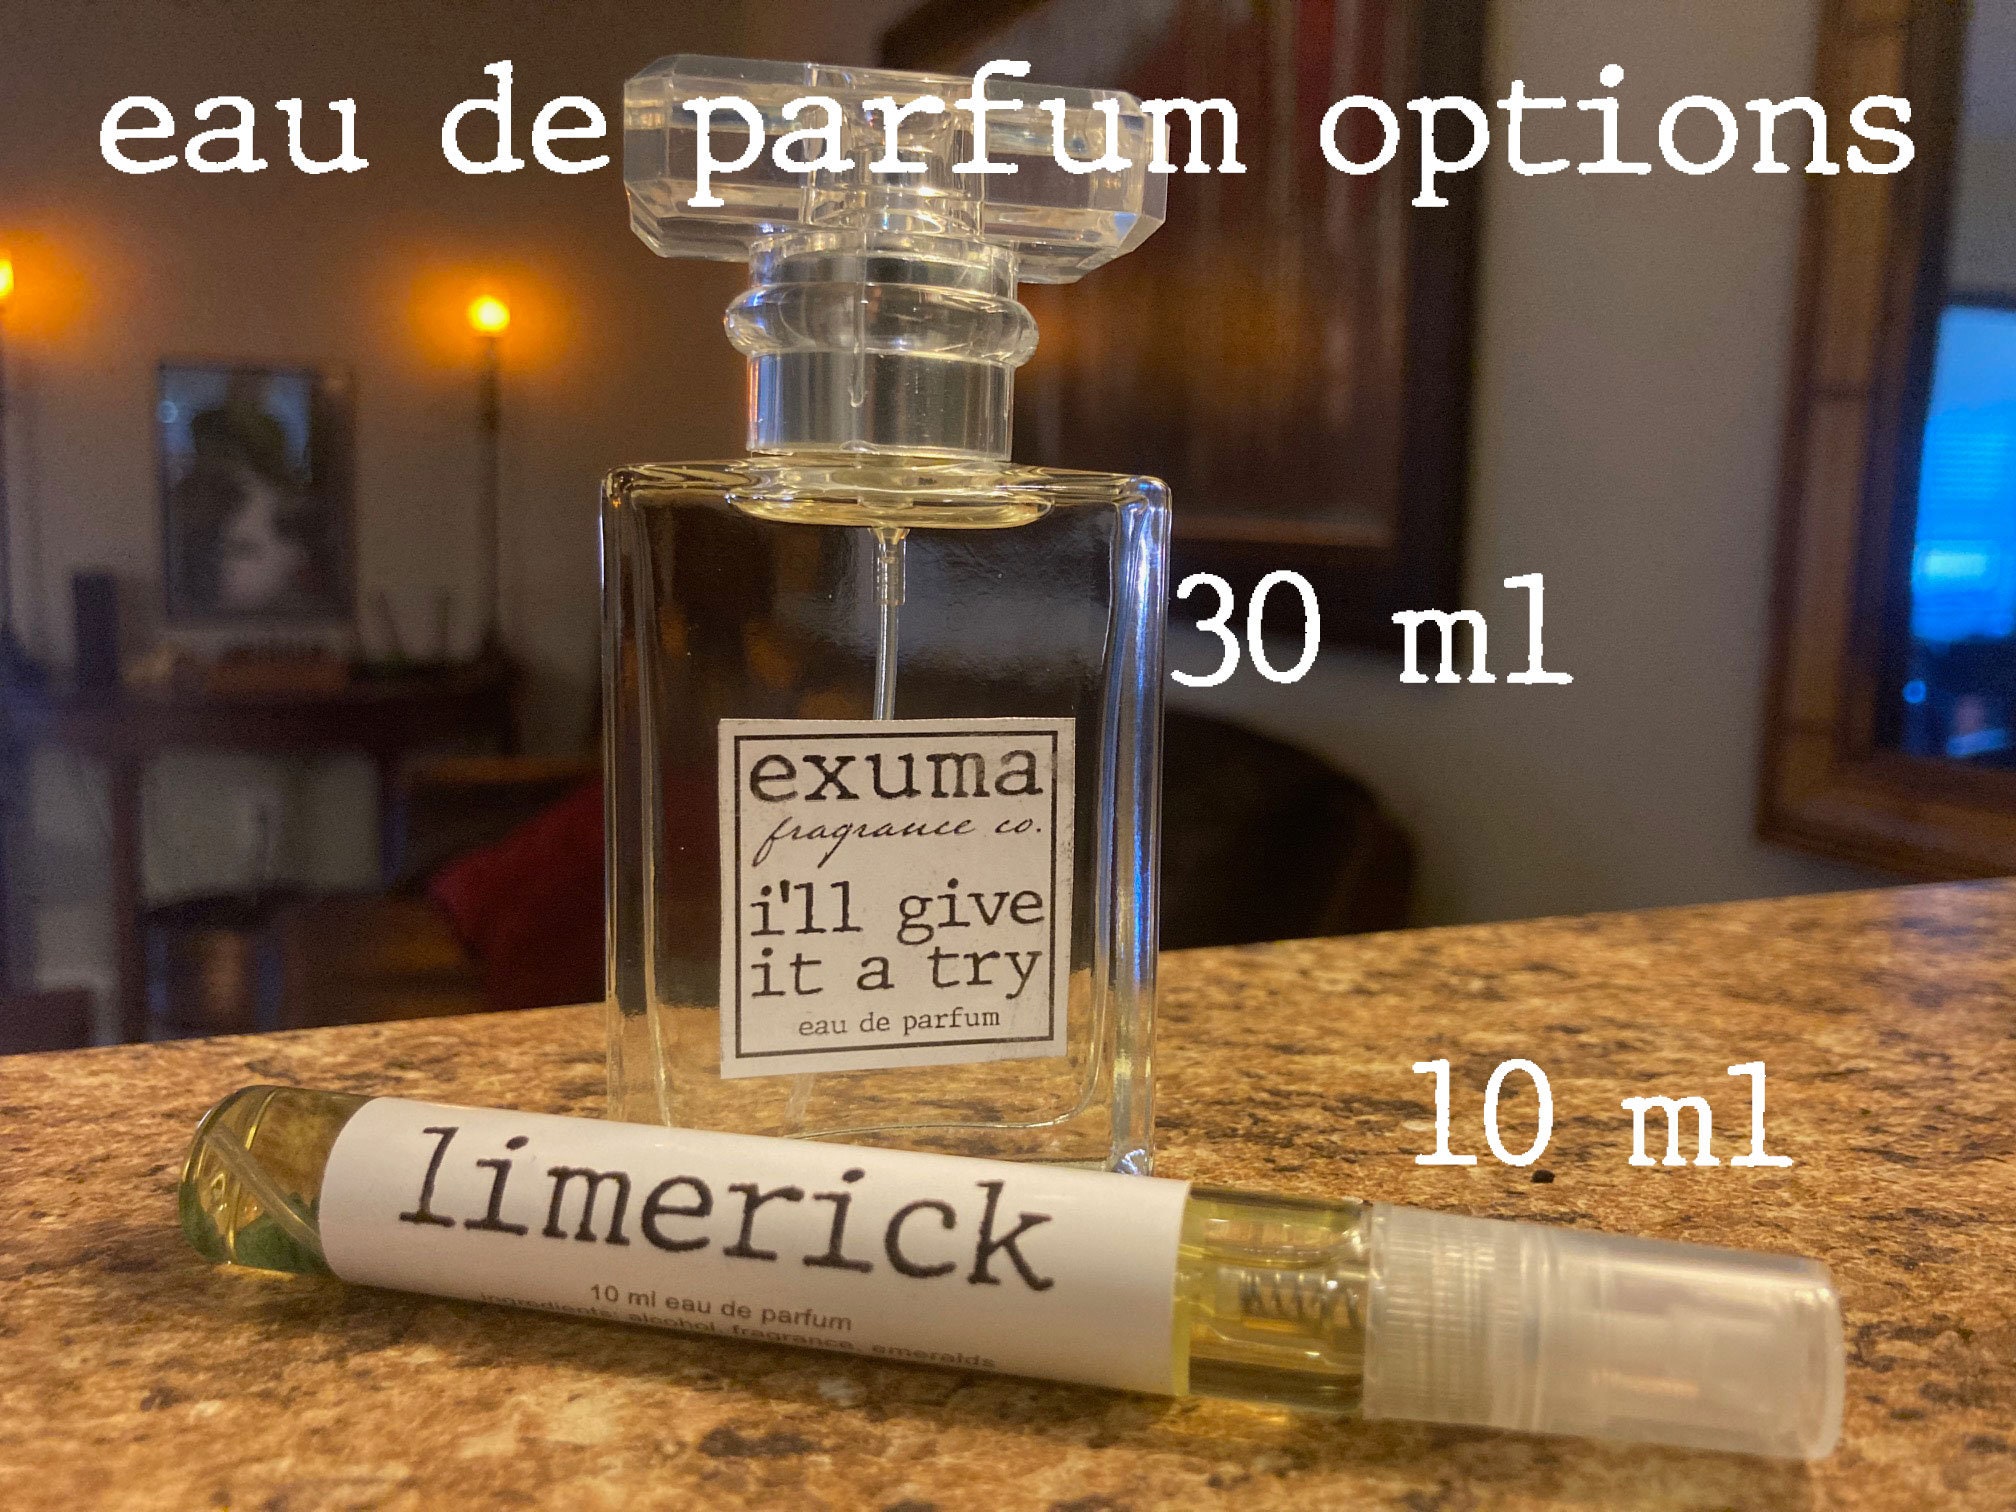 TIMELESS Natural Honeysuckle Perfume Oil, a sweet & light summer